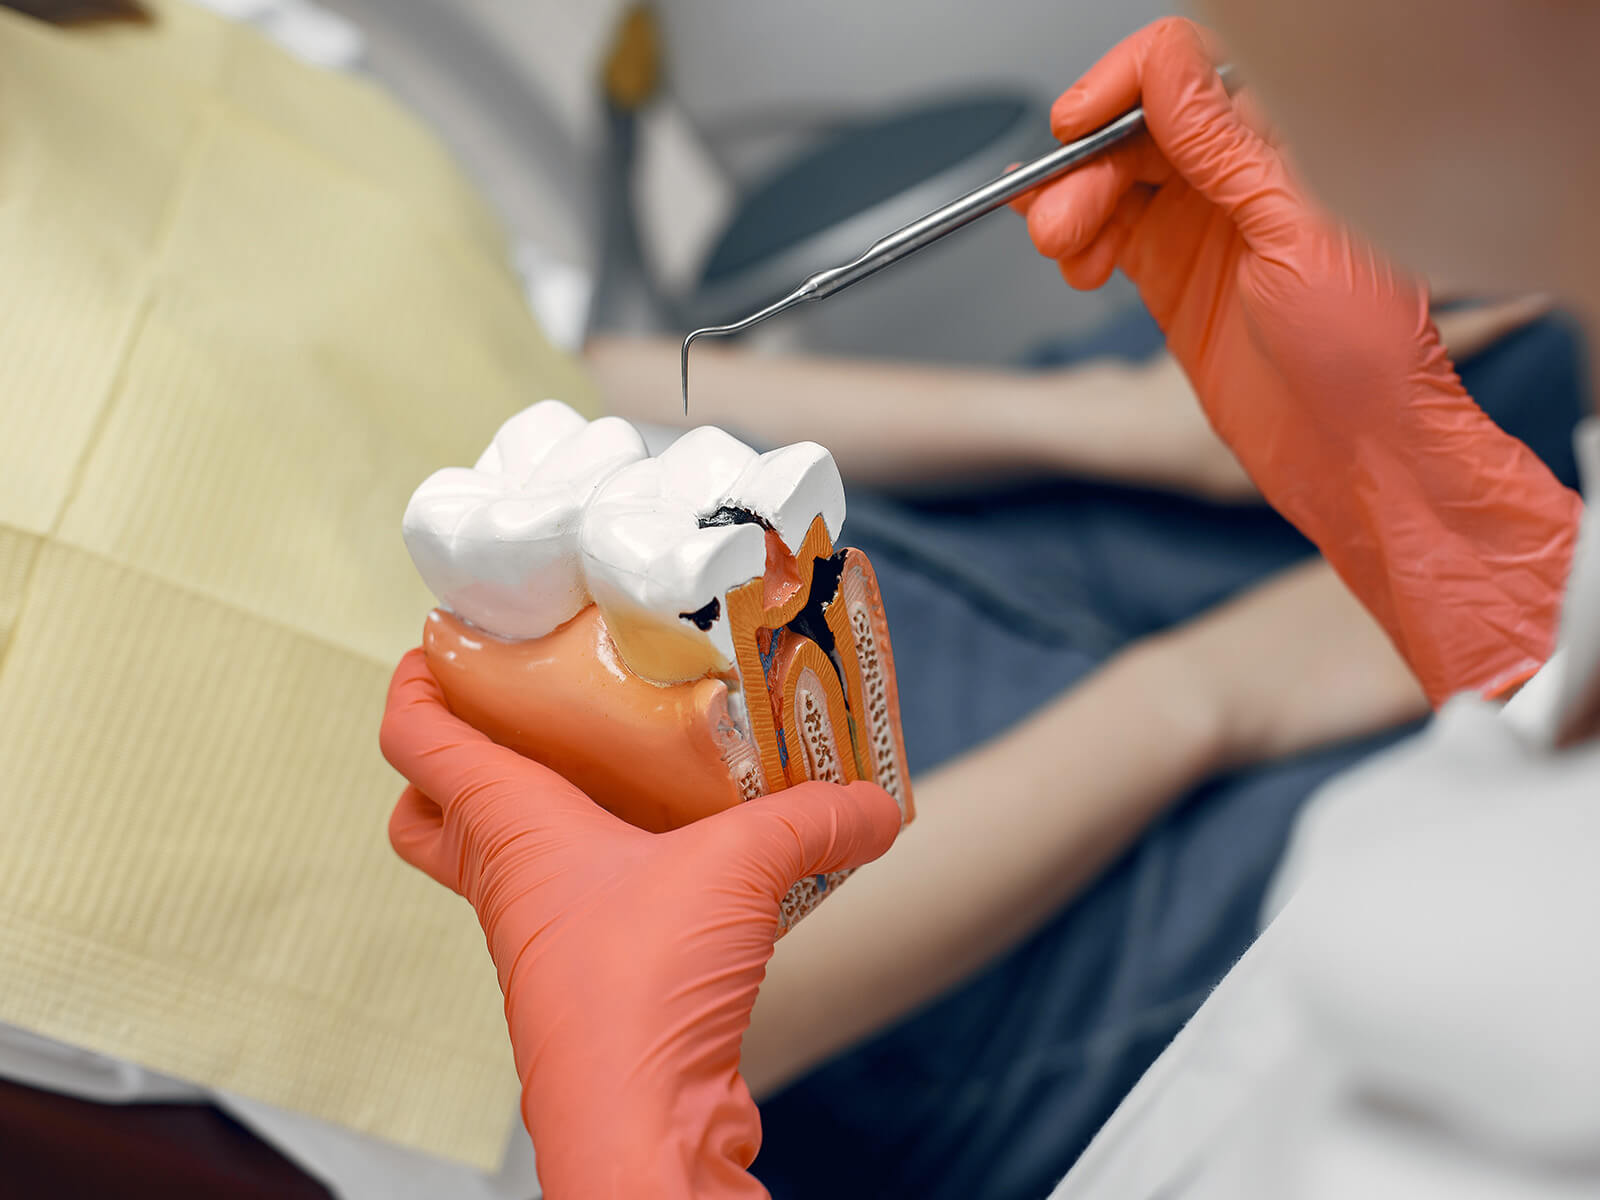 What Are Common Endodontic Treatments?